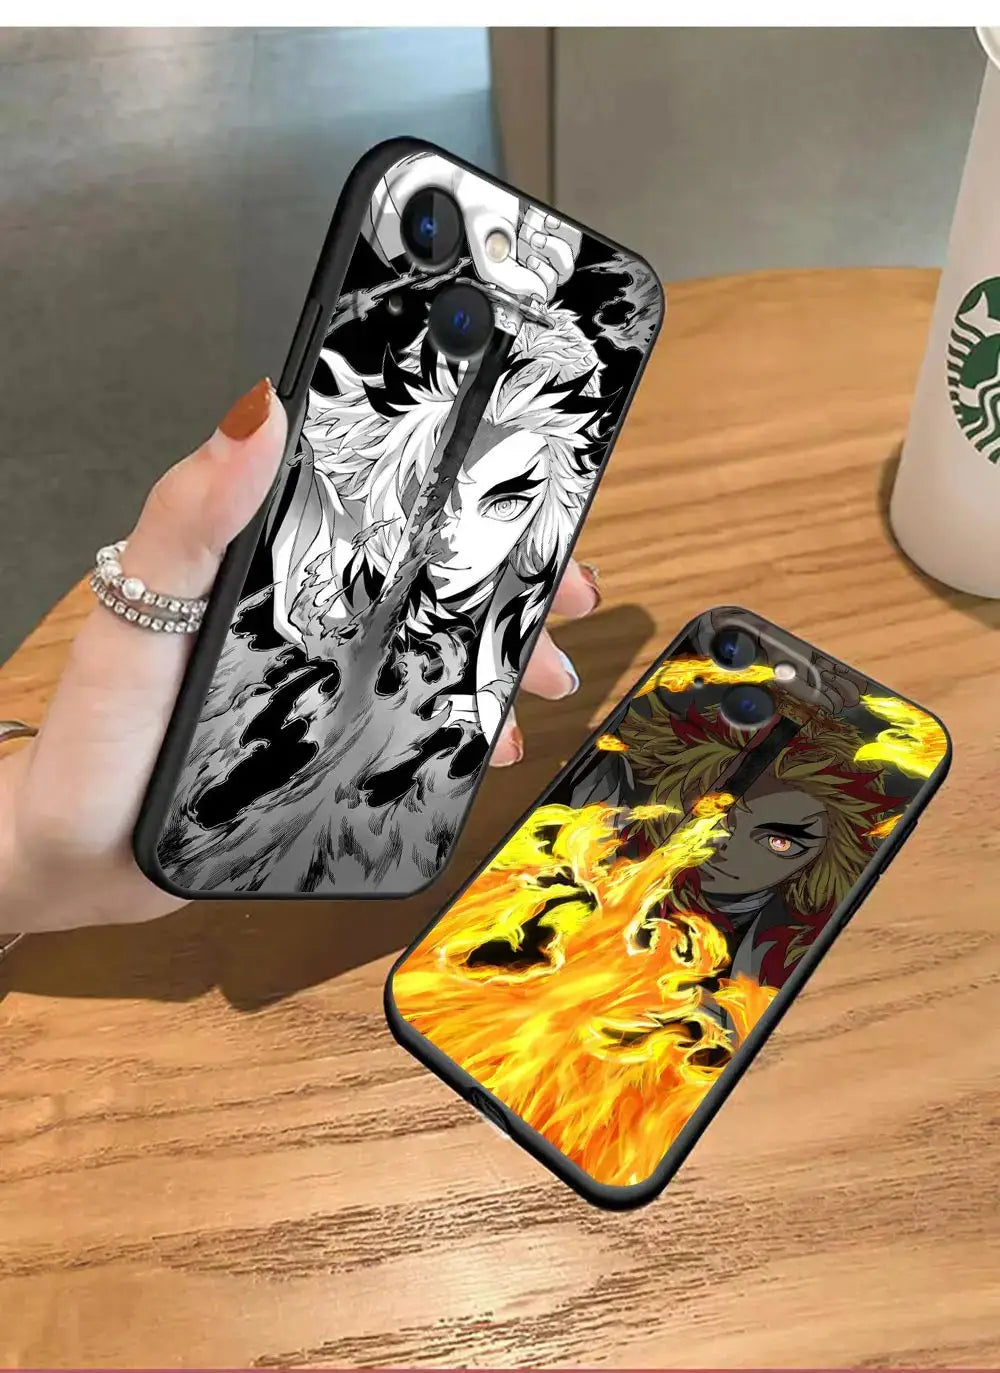 Demon Slayer Rengoku Phone Case For iphone - B05